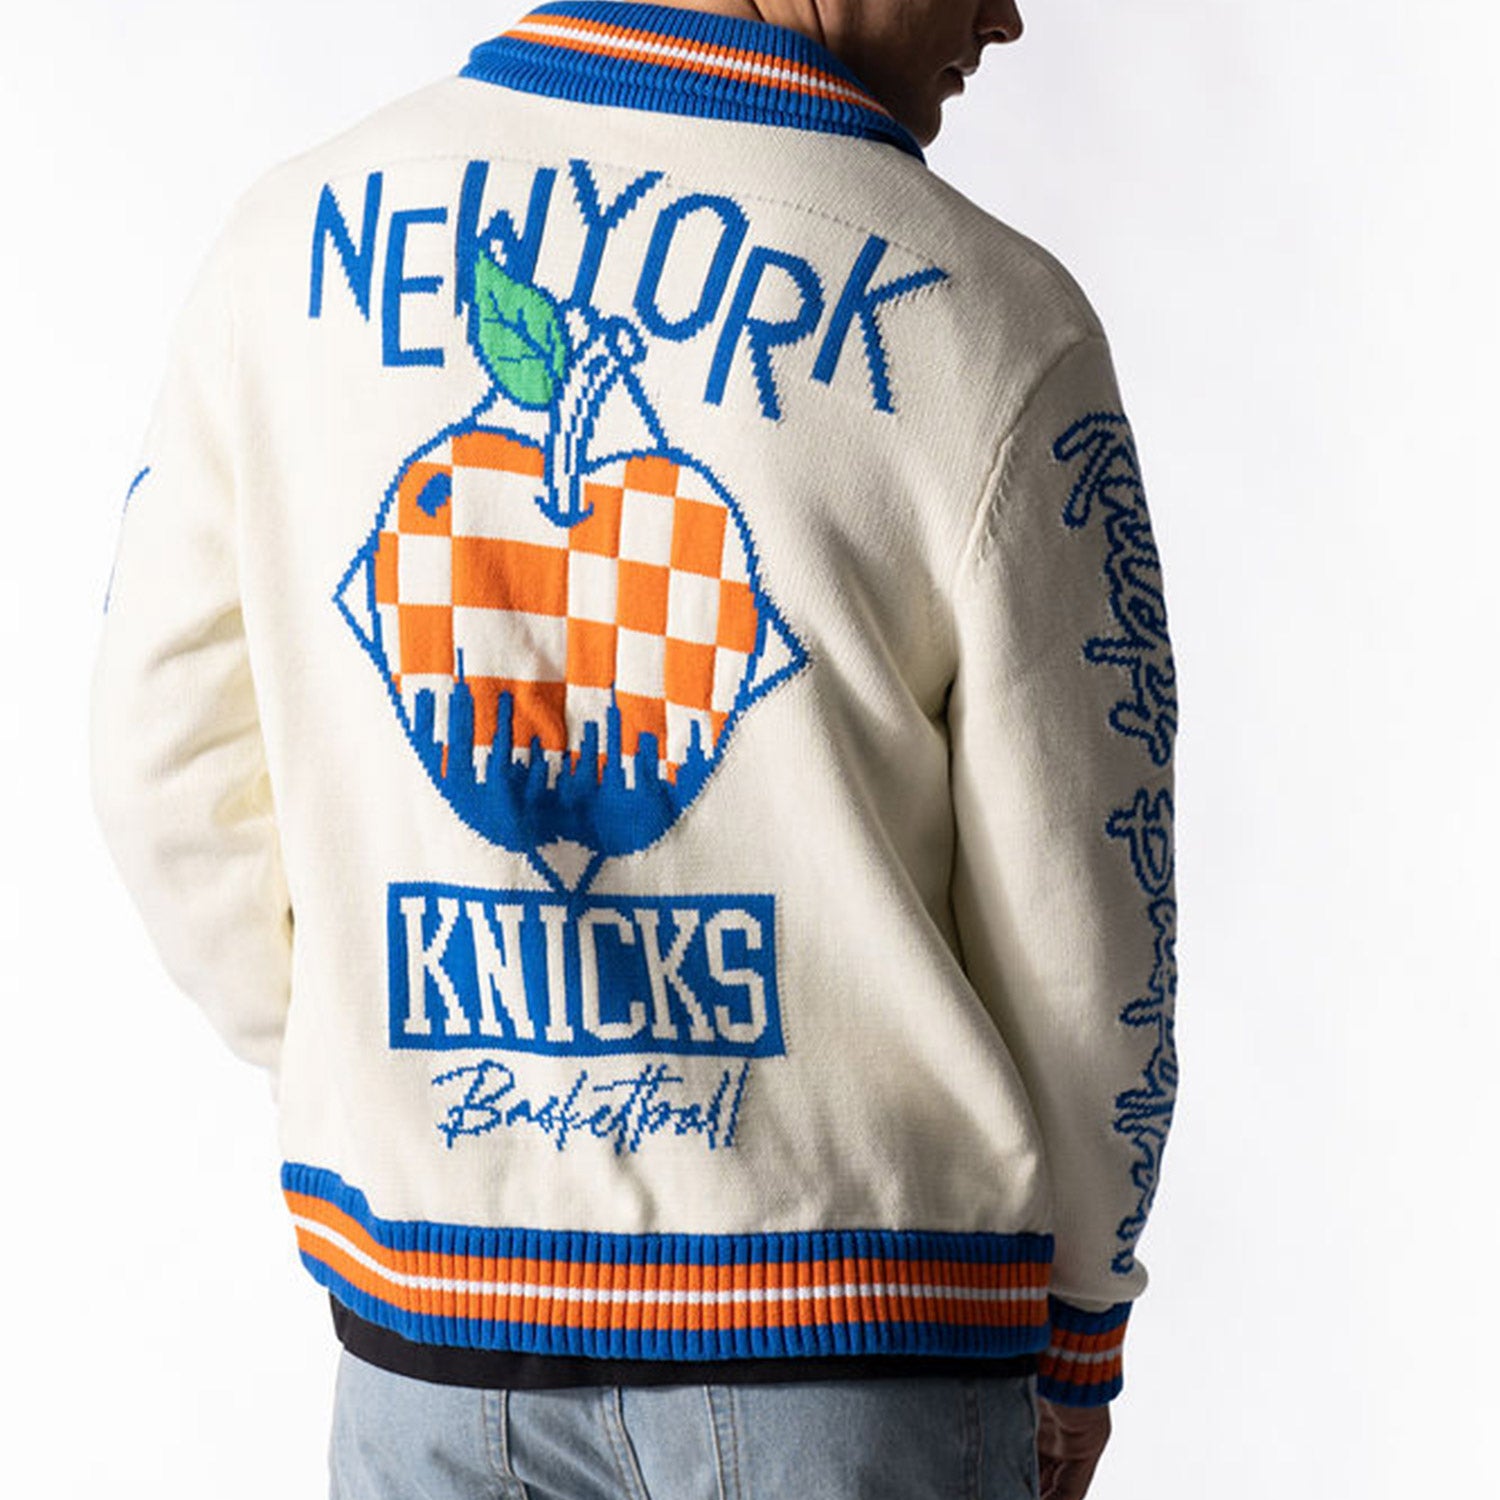 haak Vijandig Evolueren Wild Collective Knicks Jacquard Sweater | Shop Madison Square Garden